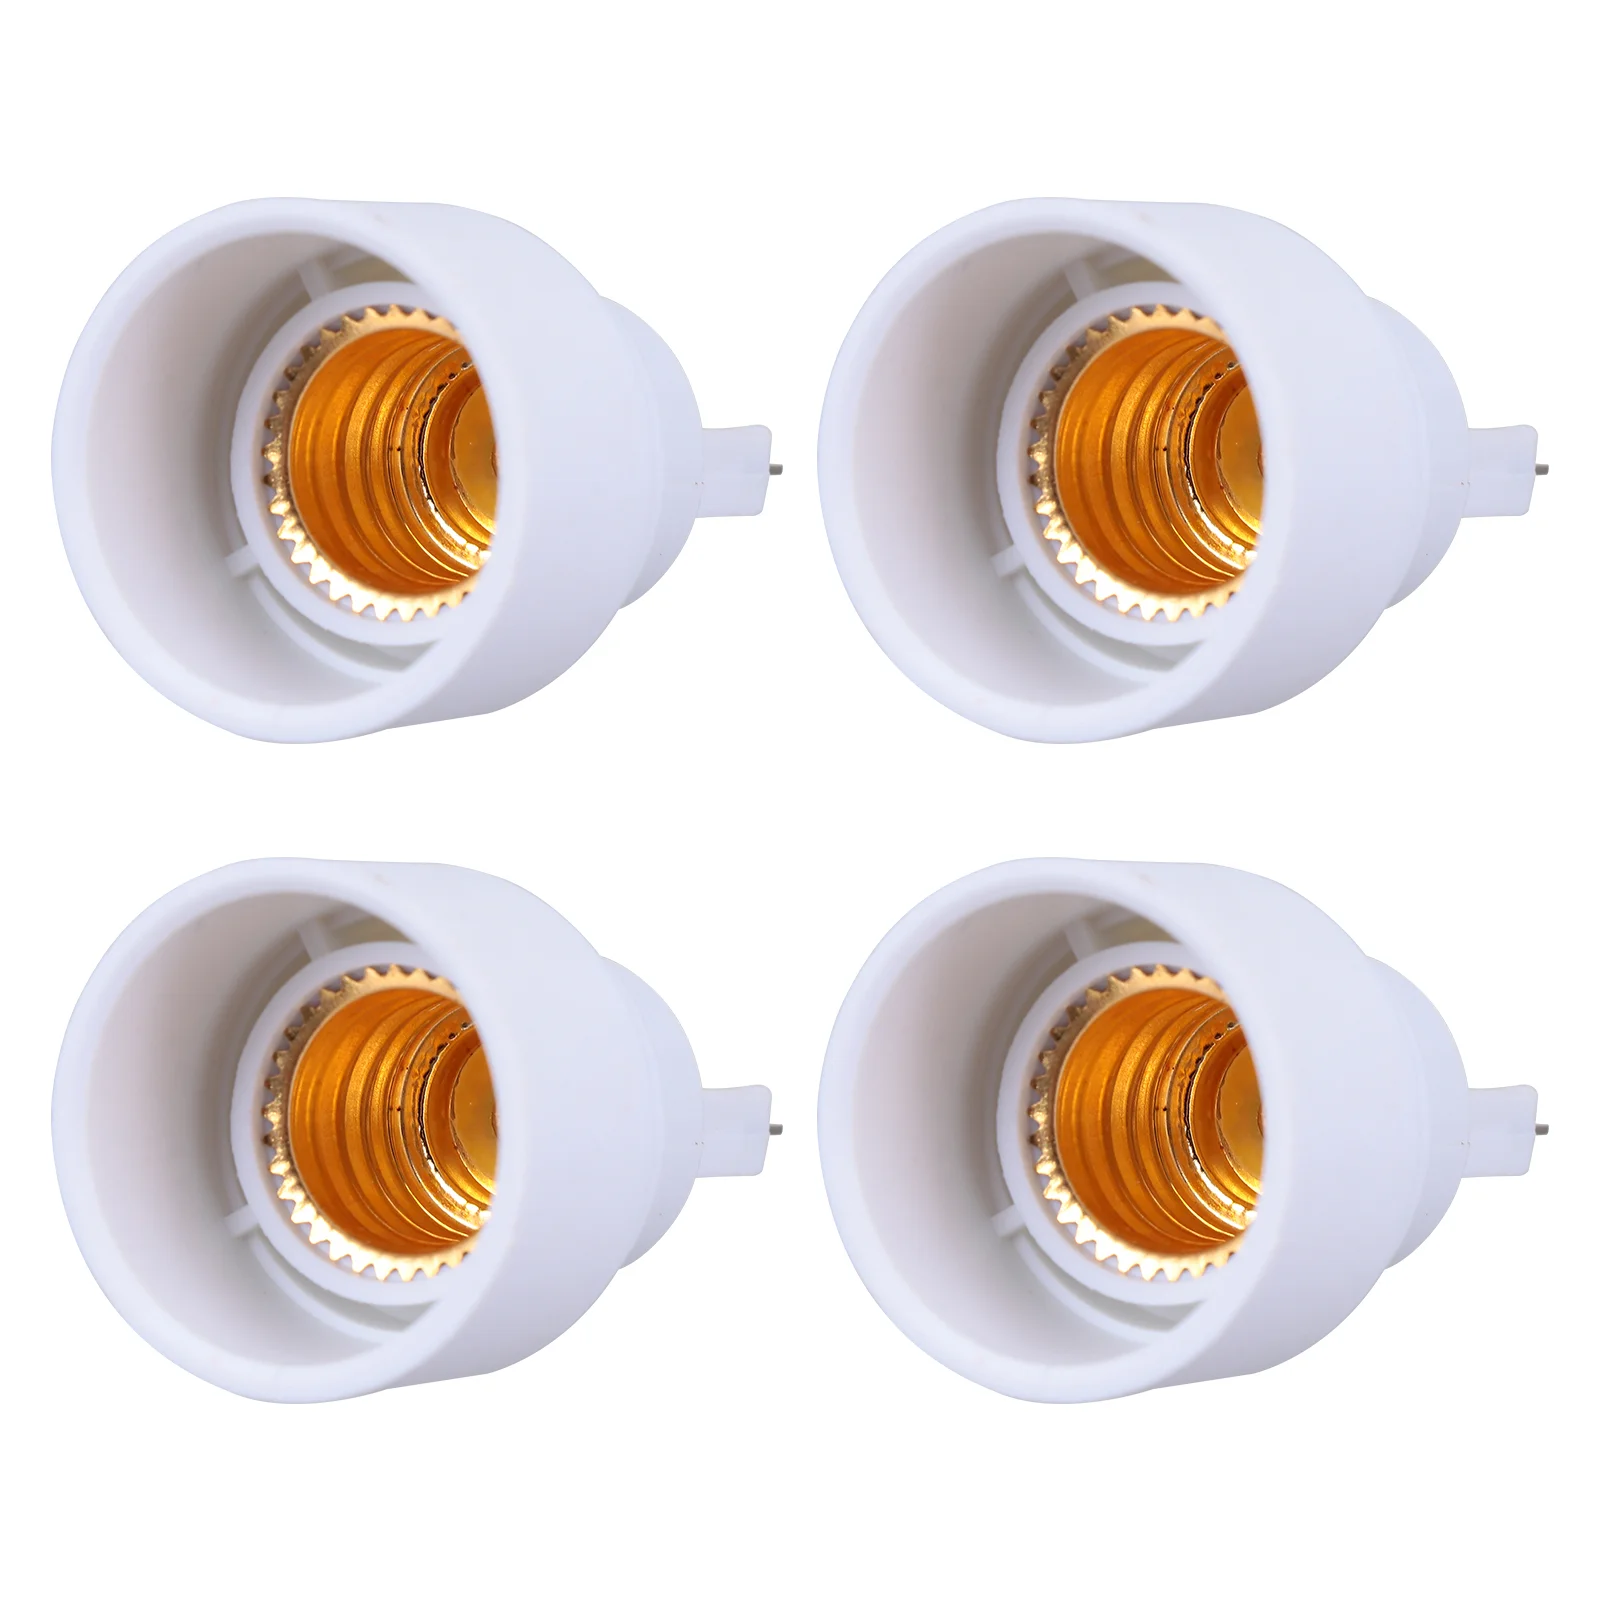 

4pcs Lamp Bulb Adapter Lamp Socket Converters G9 to E14 Lamp Holder Converters